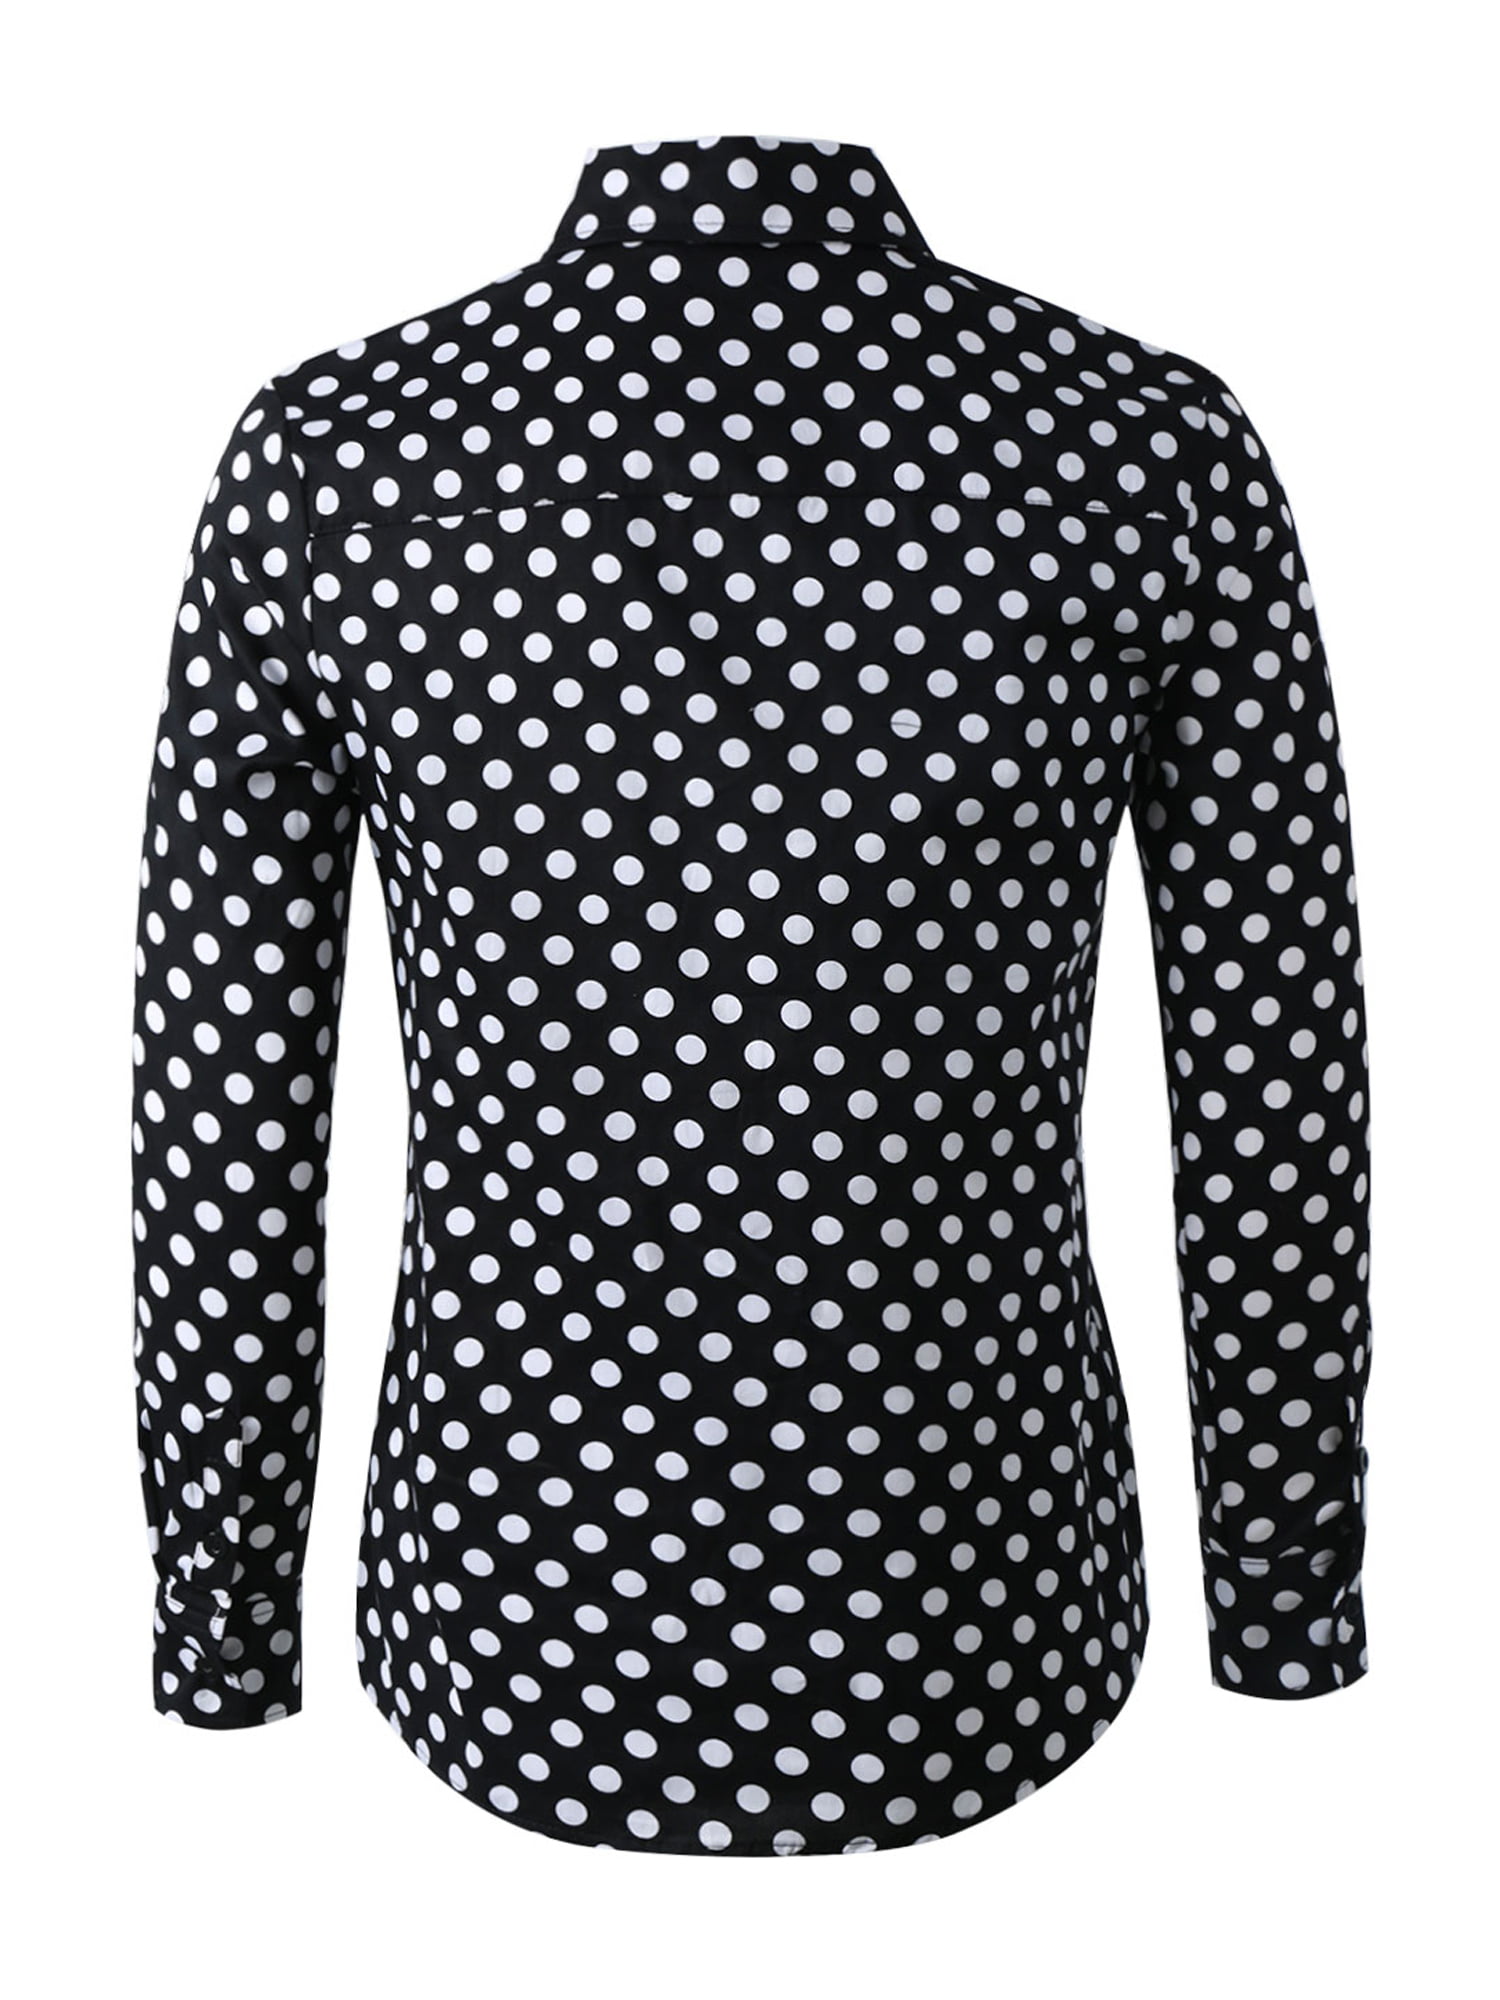 black polka dot dress shirt